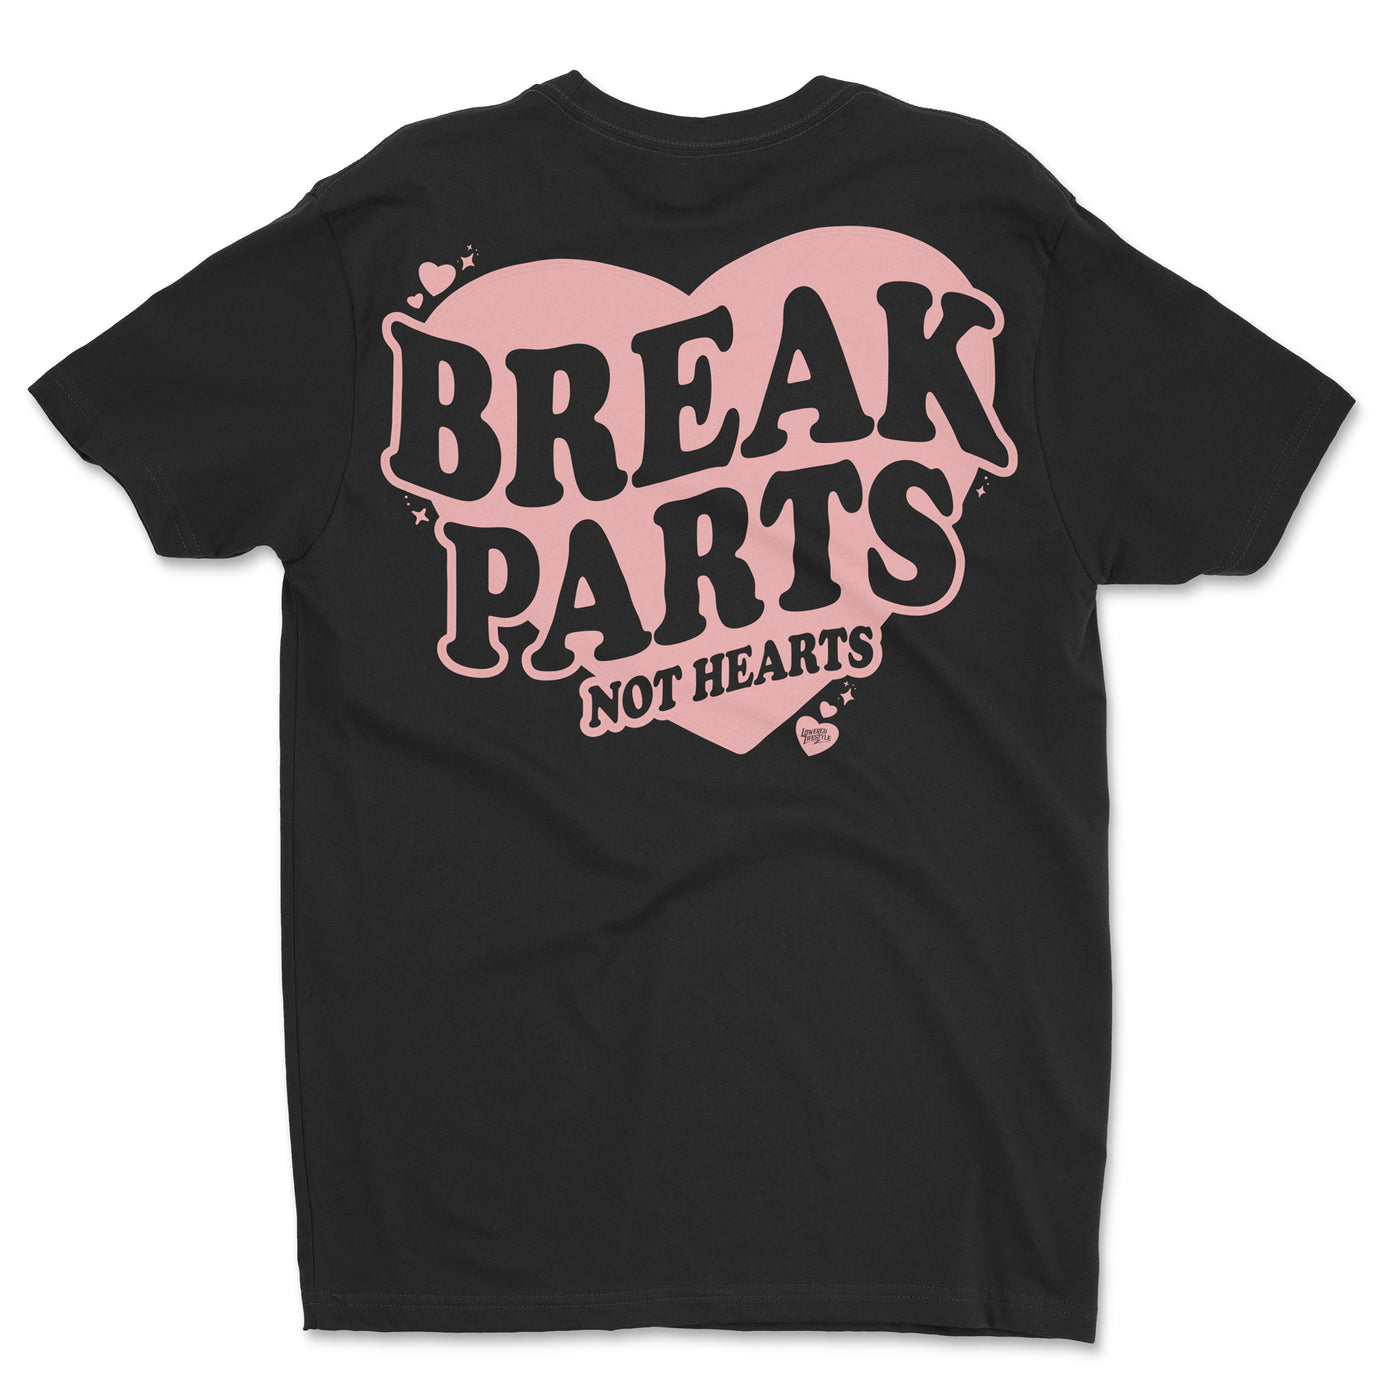 Break Parts Not Hearts Shirt